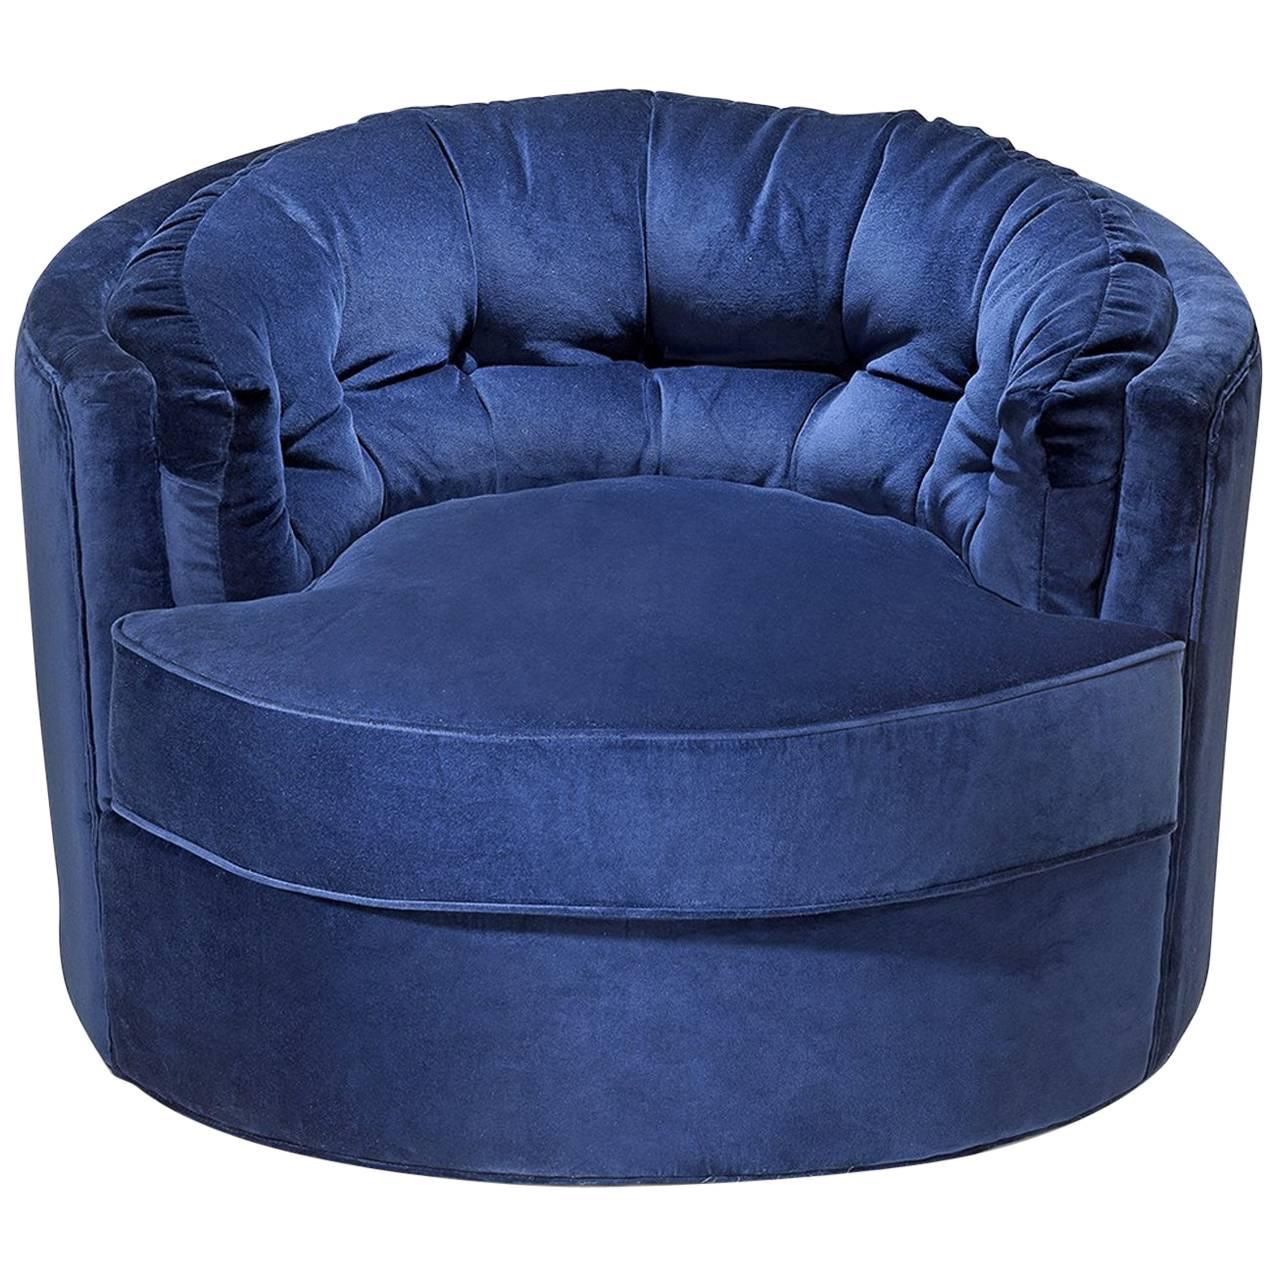 Kalaha Sessel aus blauem Samt oder türkisfarbenem Samt